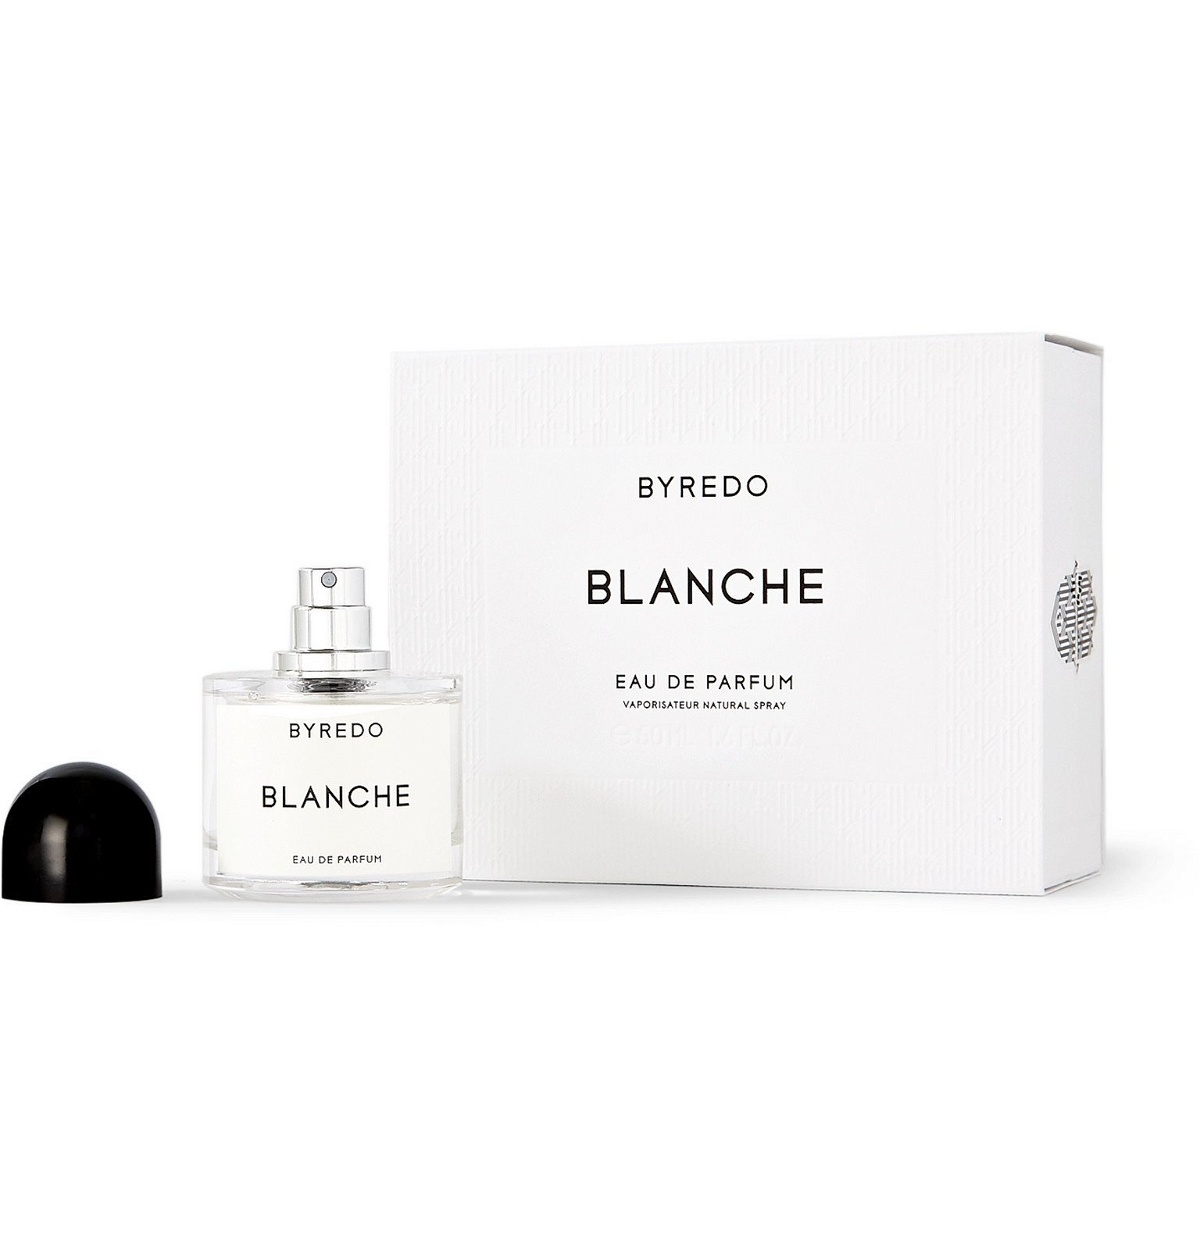 Byredo - Eau de Parfum - Blanche, 100ml - Colorless Byredo